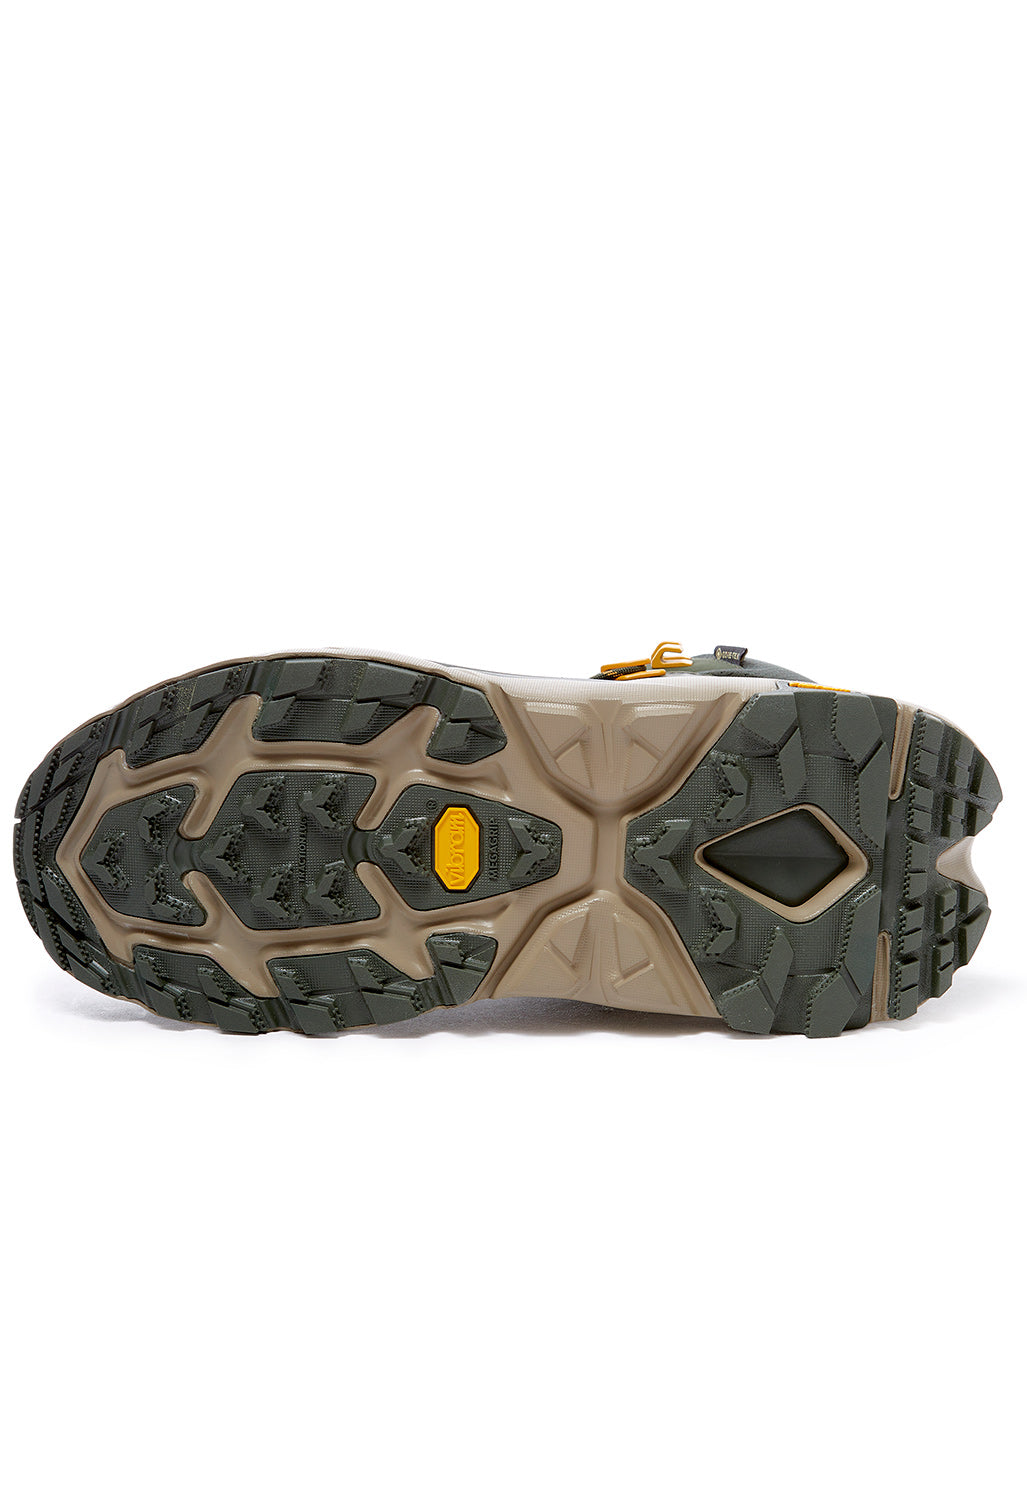 Hoka Kaha 2 GORE-TEX Men's Boots - Duffel Bag/Radiant Yellow